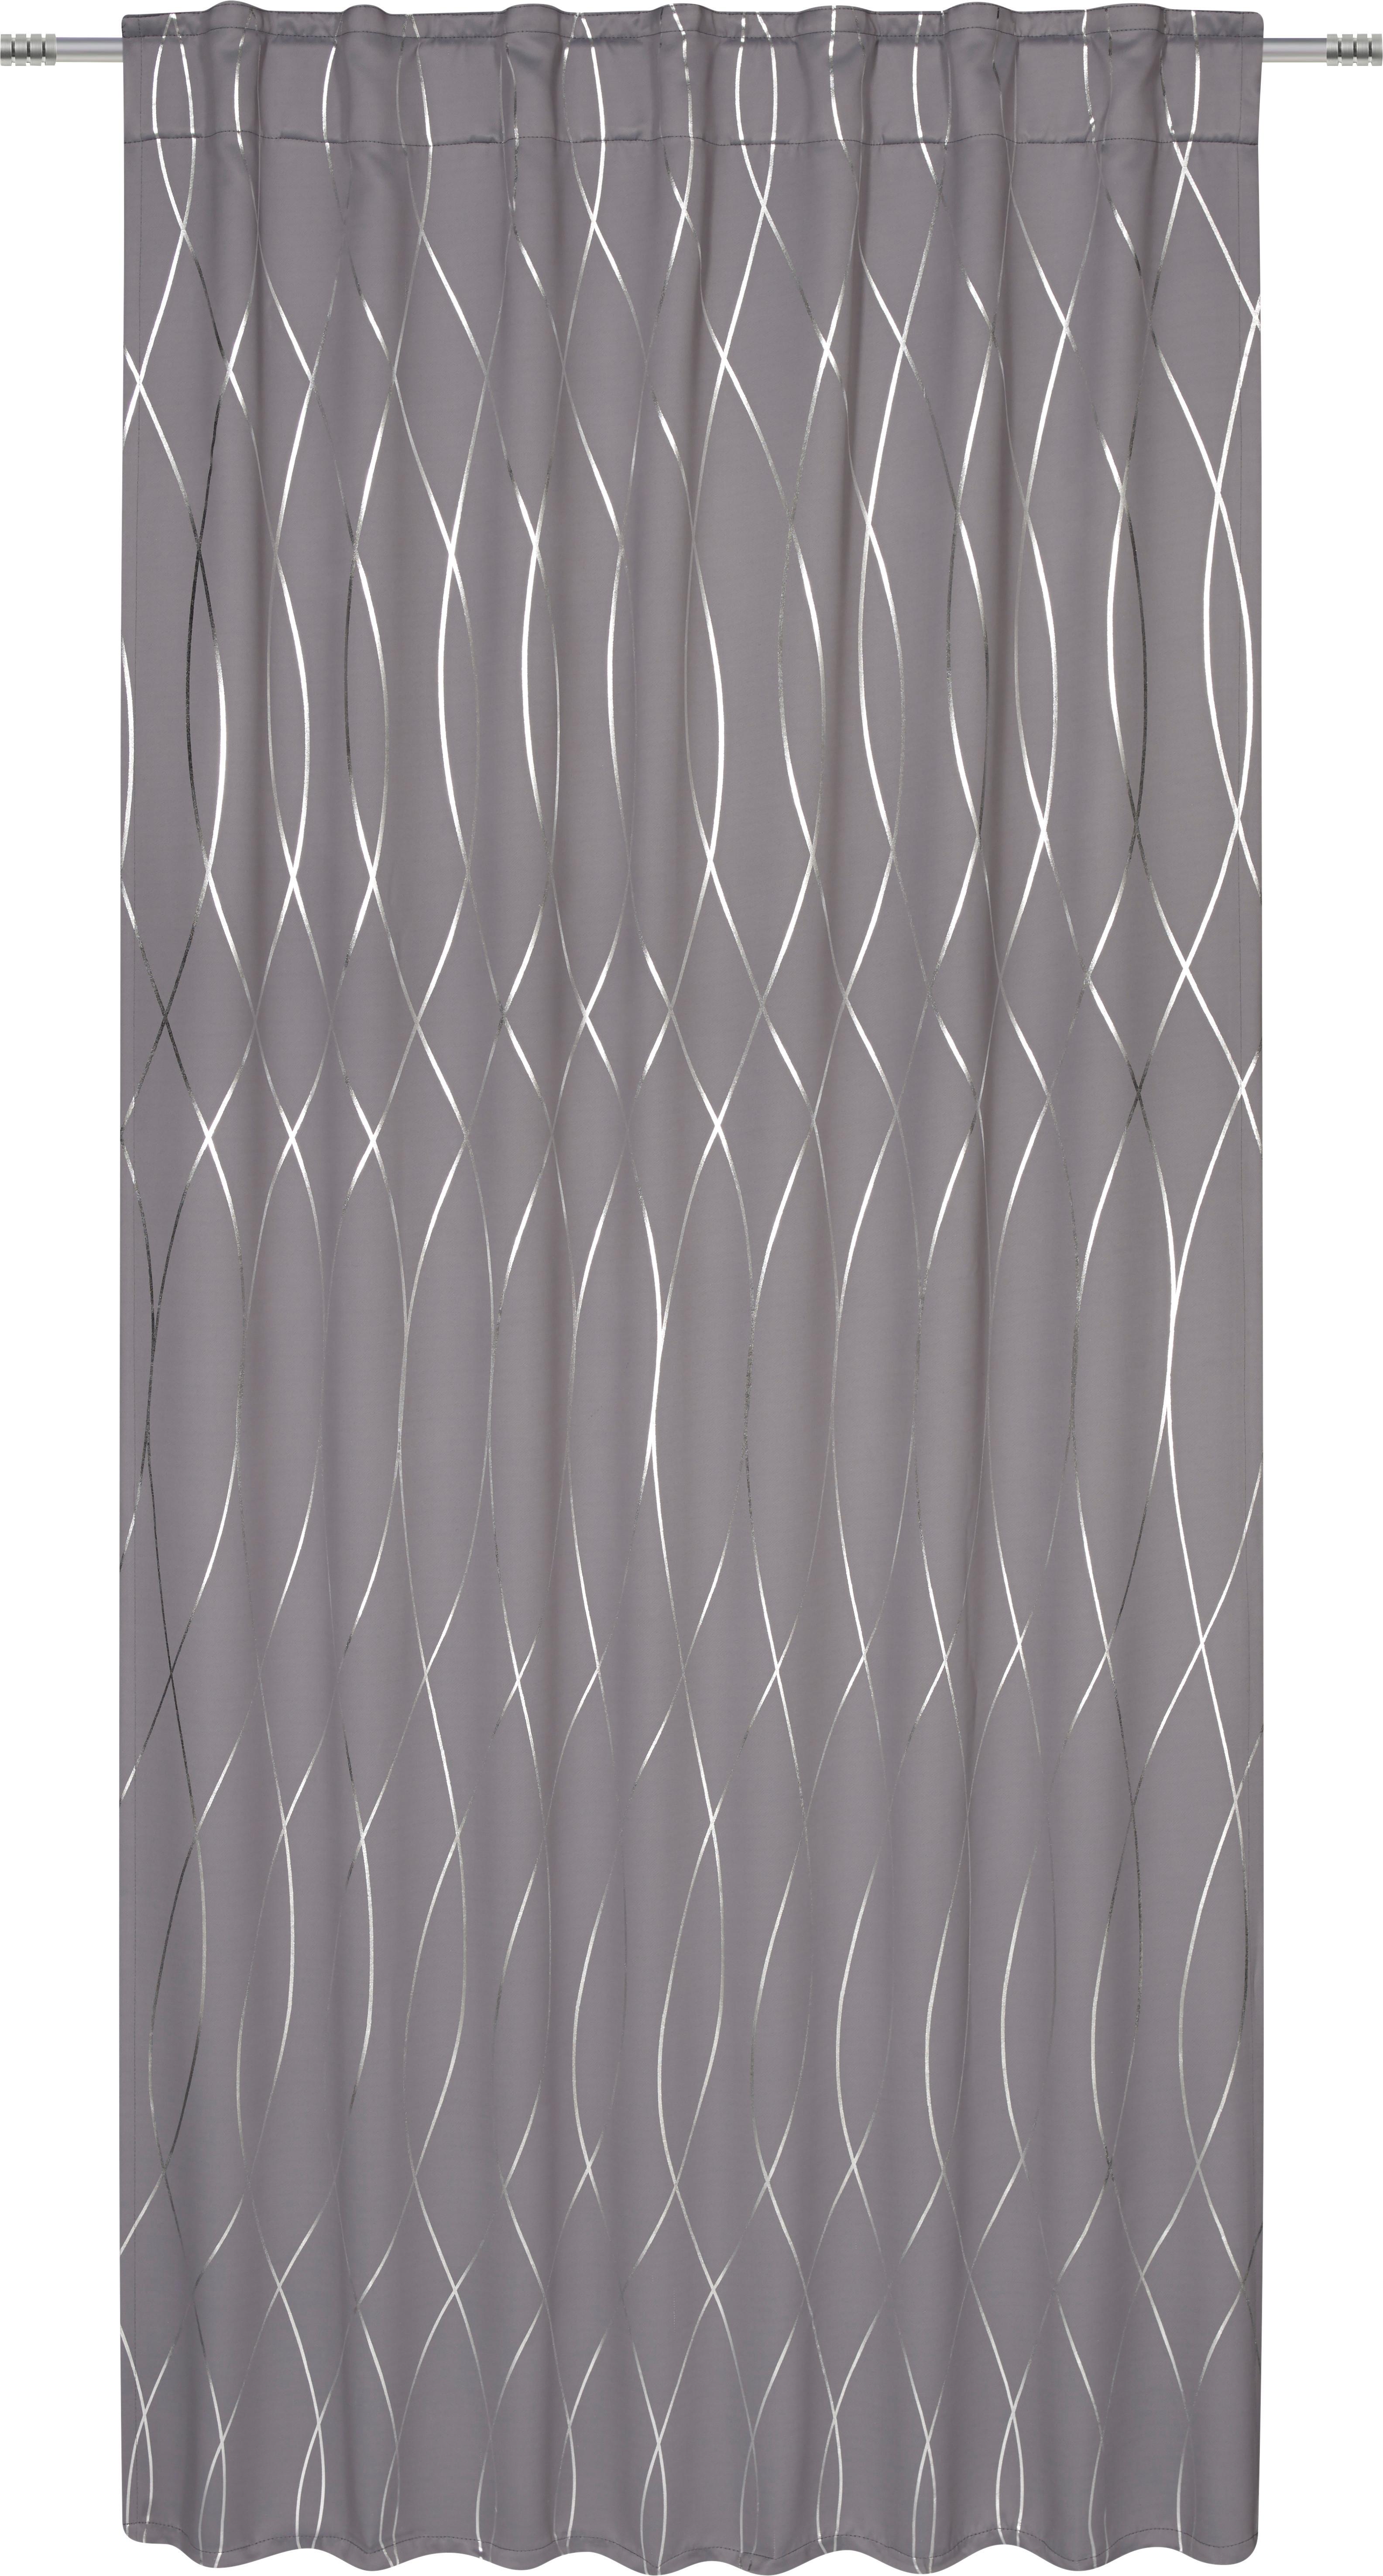 Draperie opacă GLAMOUR - argintiu/antracit, Lifestyle, textil (140/245cm) - Modern Living